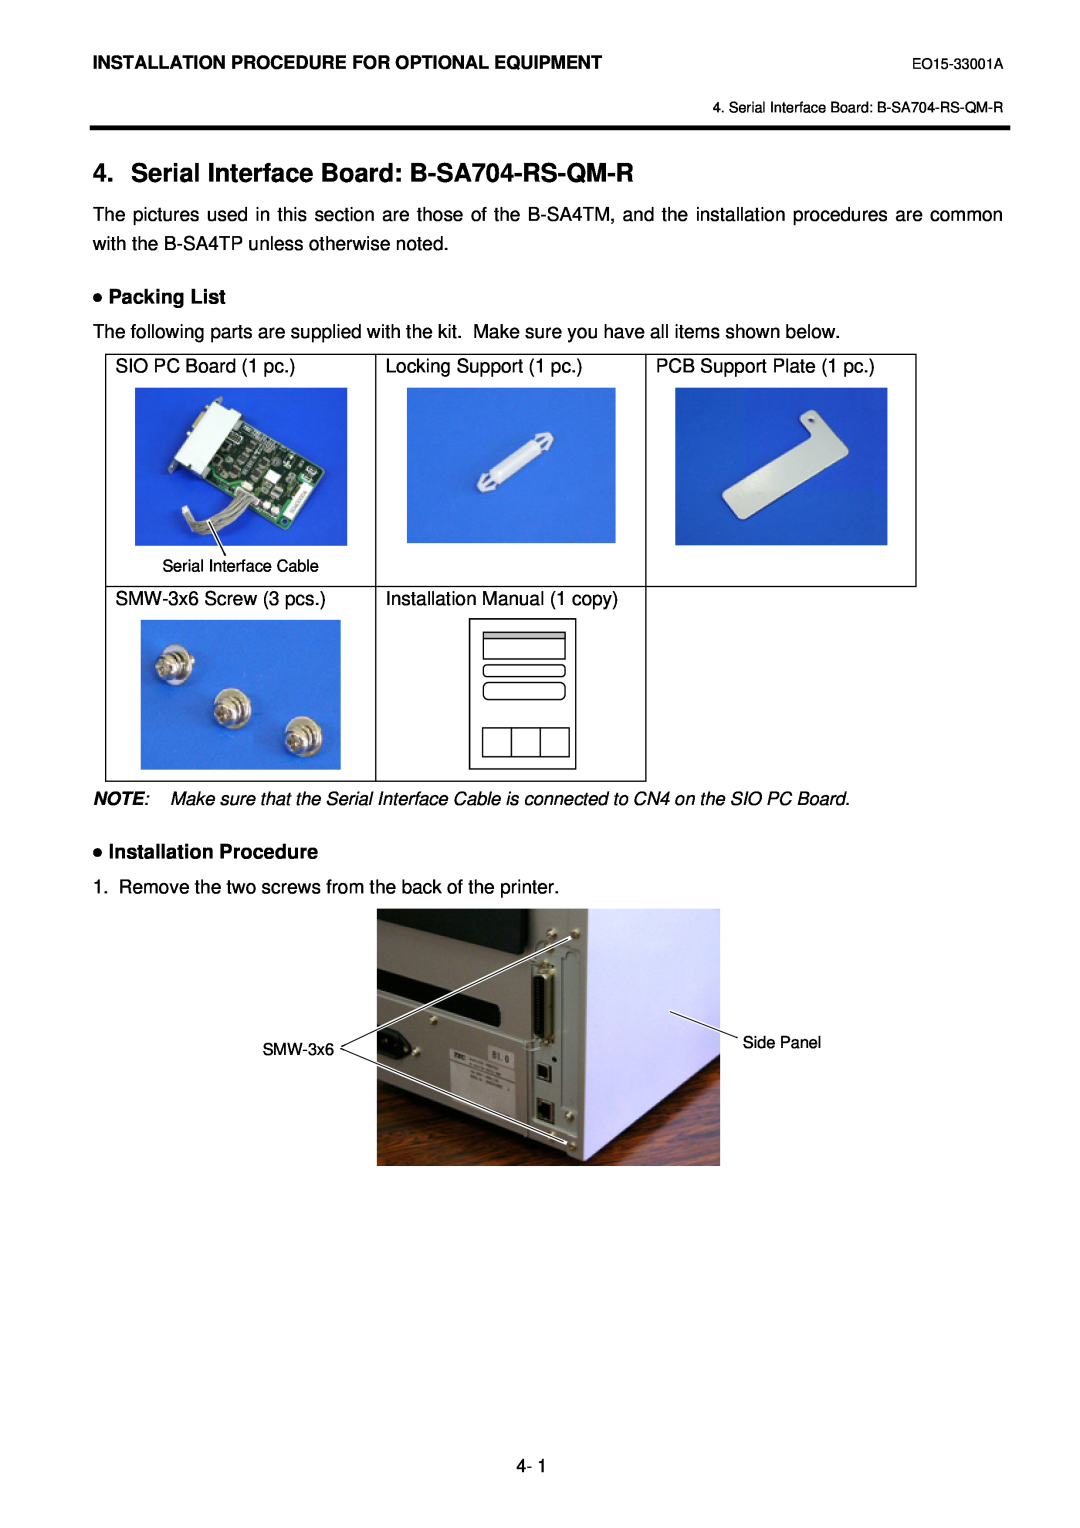 Toshiba B-SA4T installation manual Serial Interface Board B-SA704-RS-QM-R, Packing List, Installation Procedure, Side Panel 